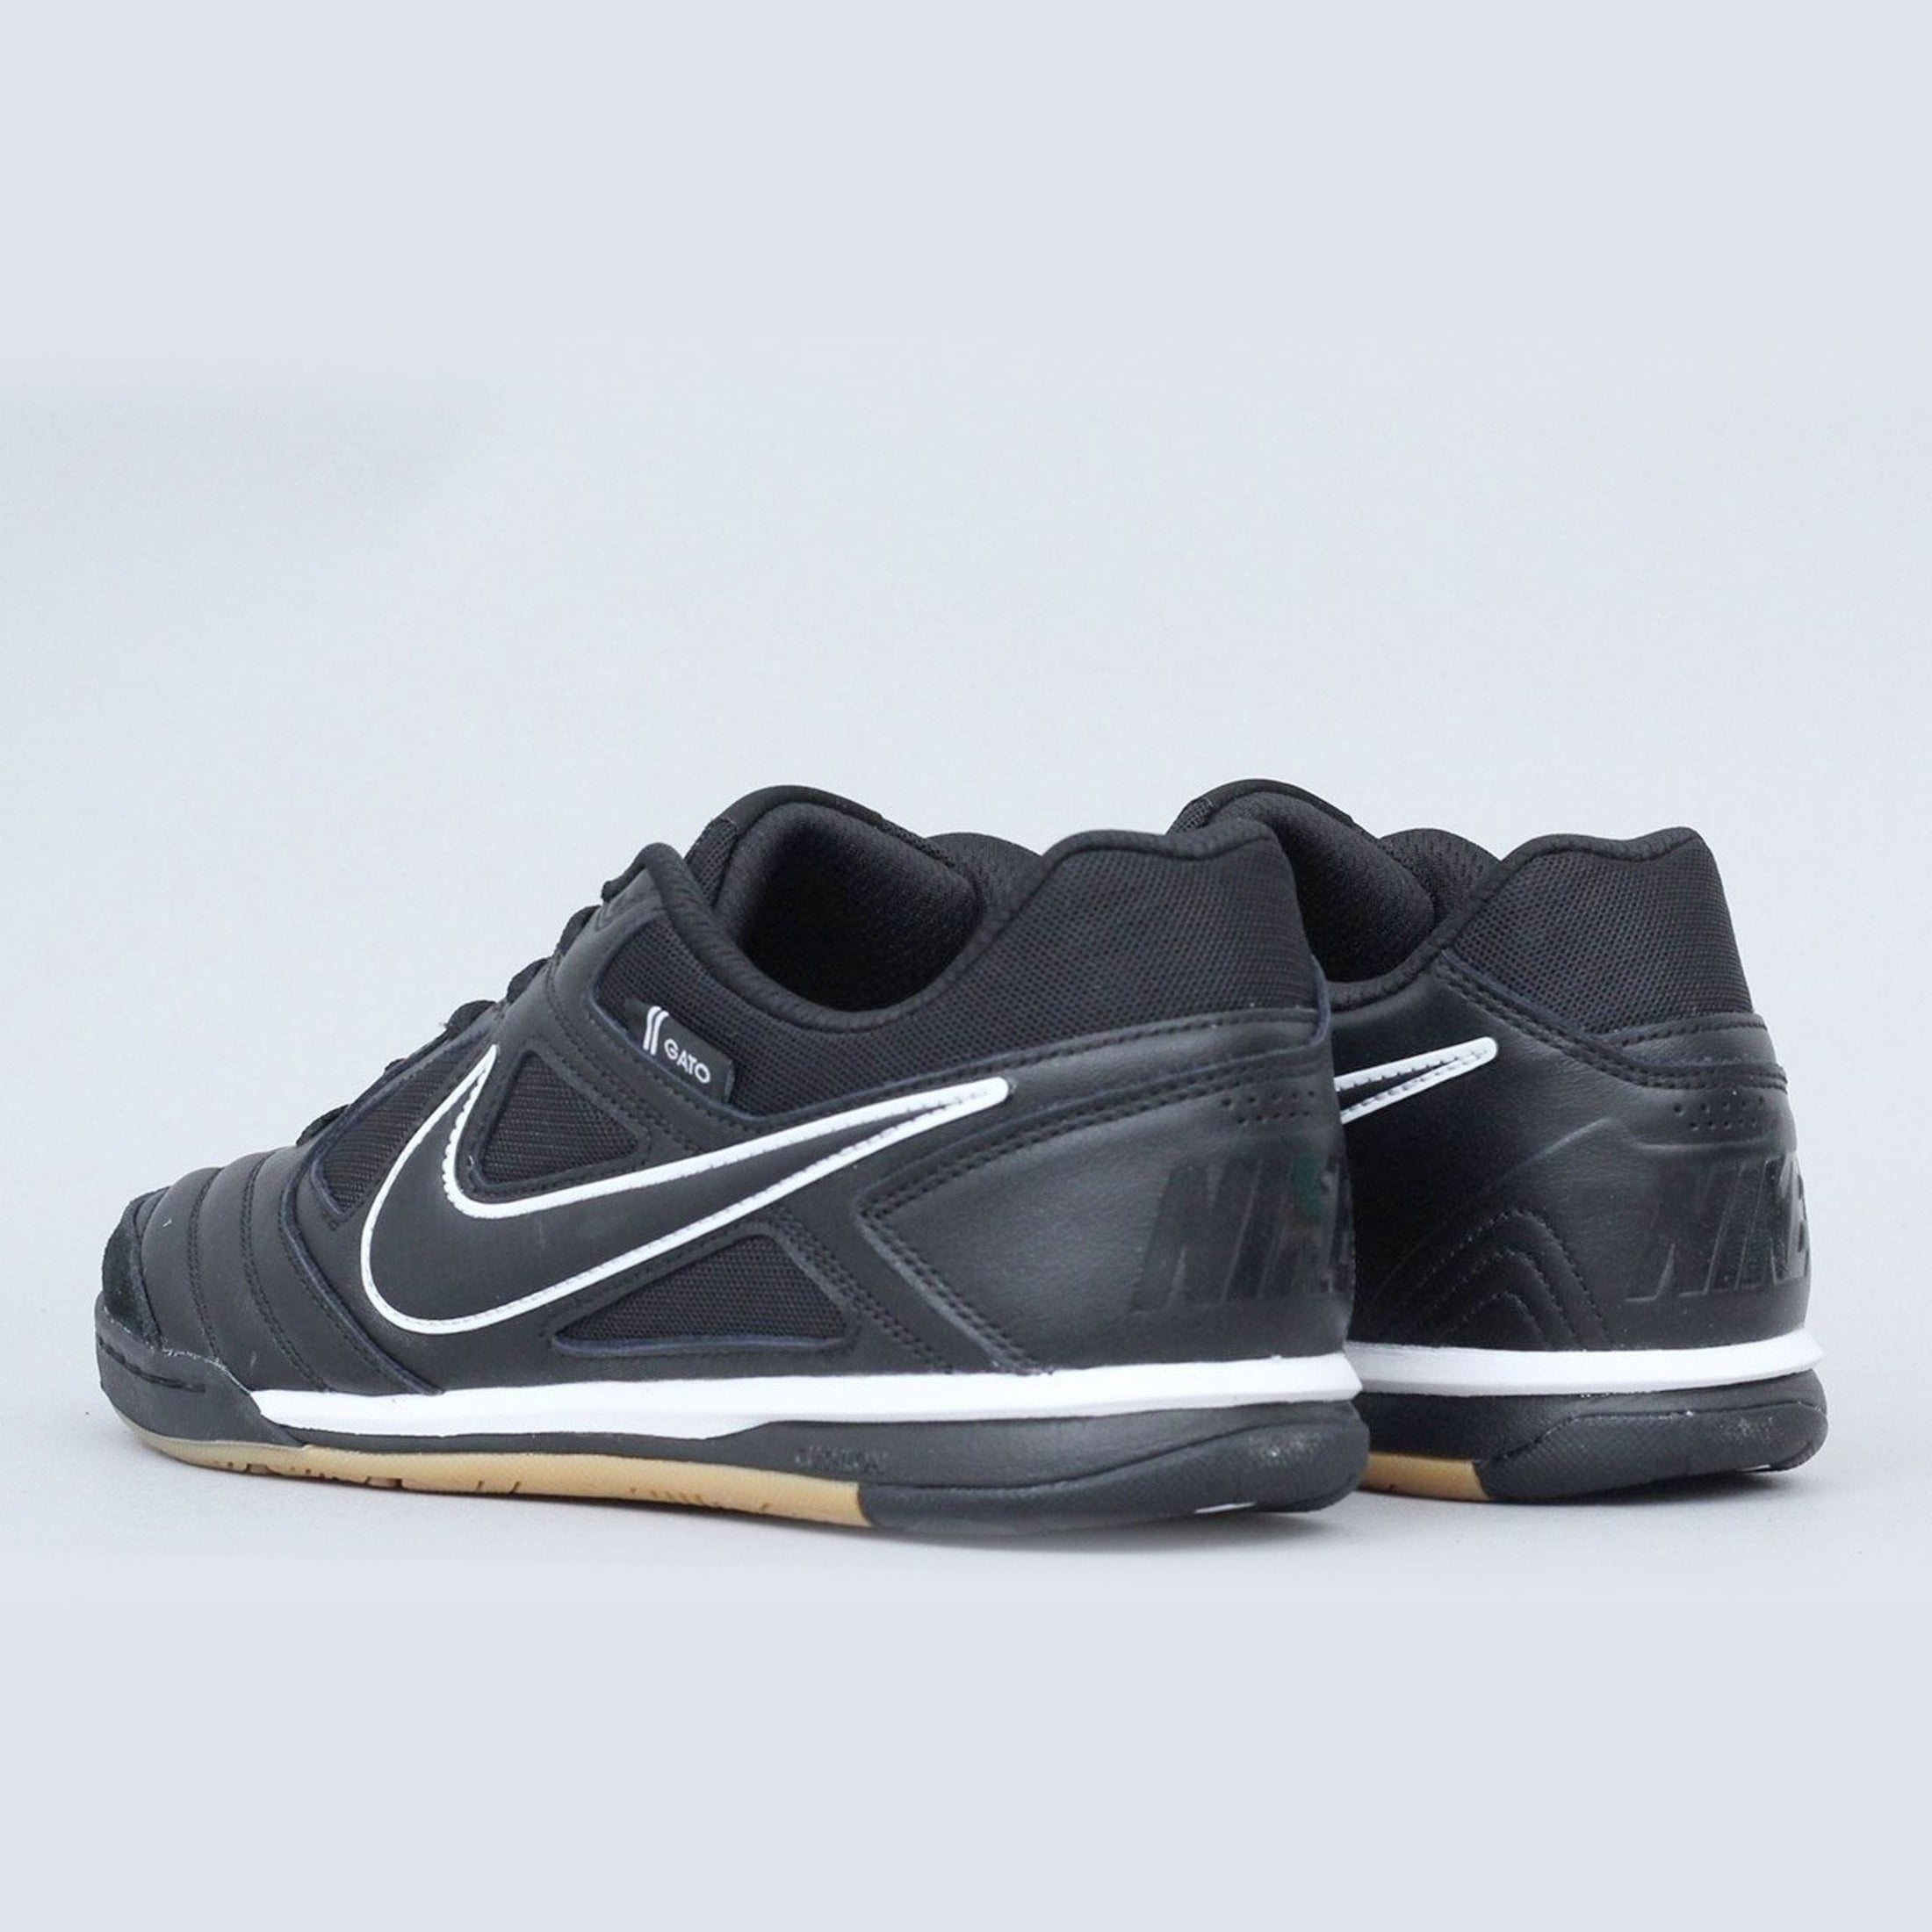 Nike SB Gato Shoes Black / Black - White